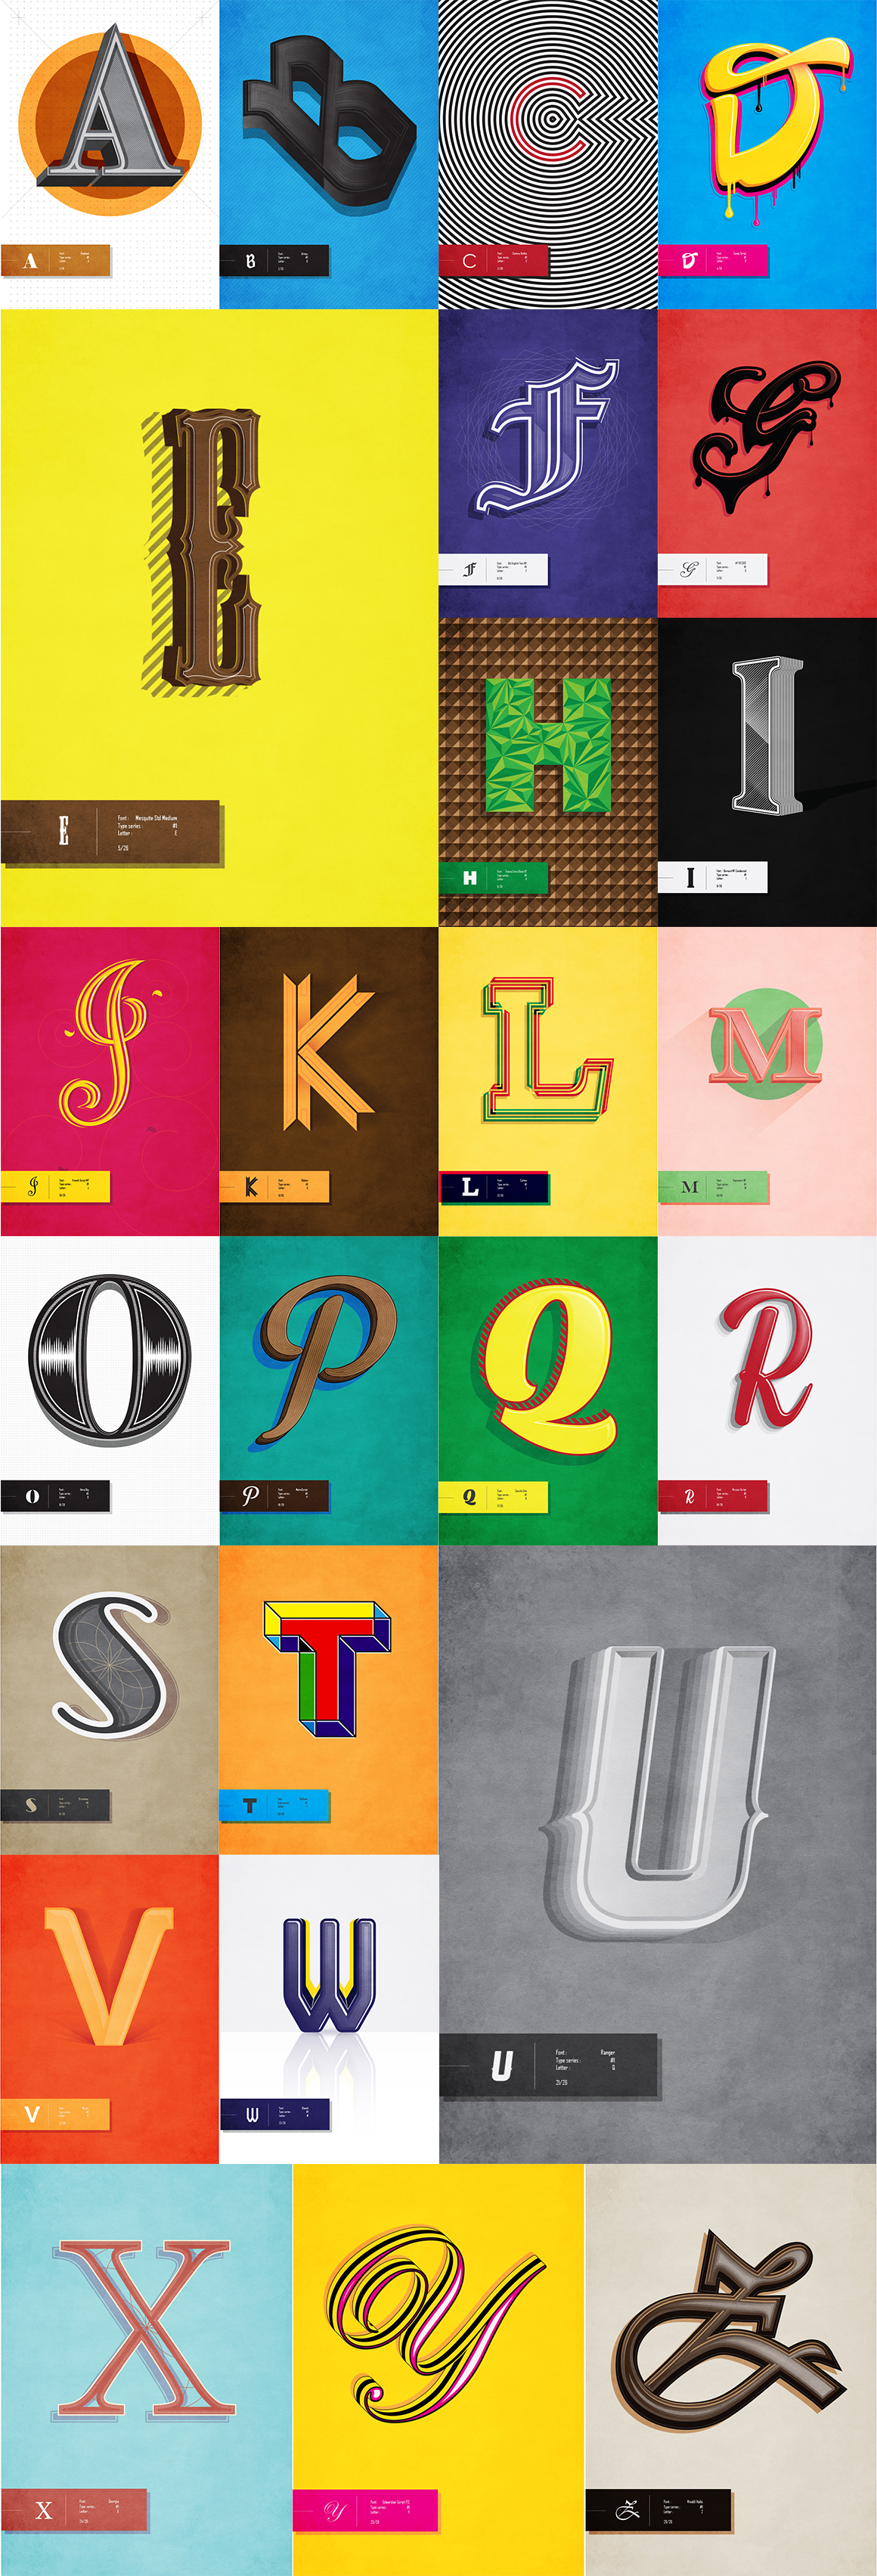 alphabet type design posters A2Z Illustrator vectors